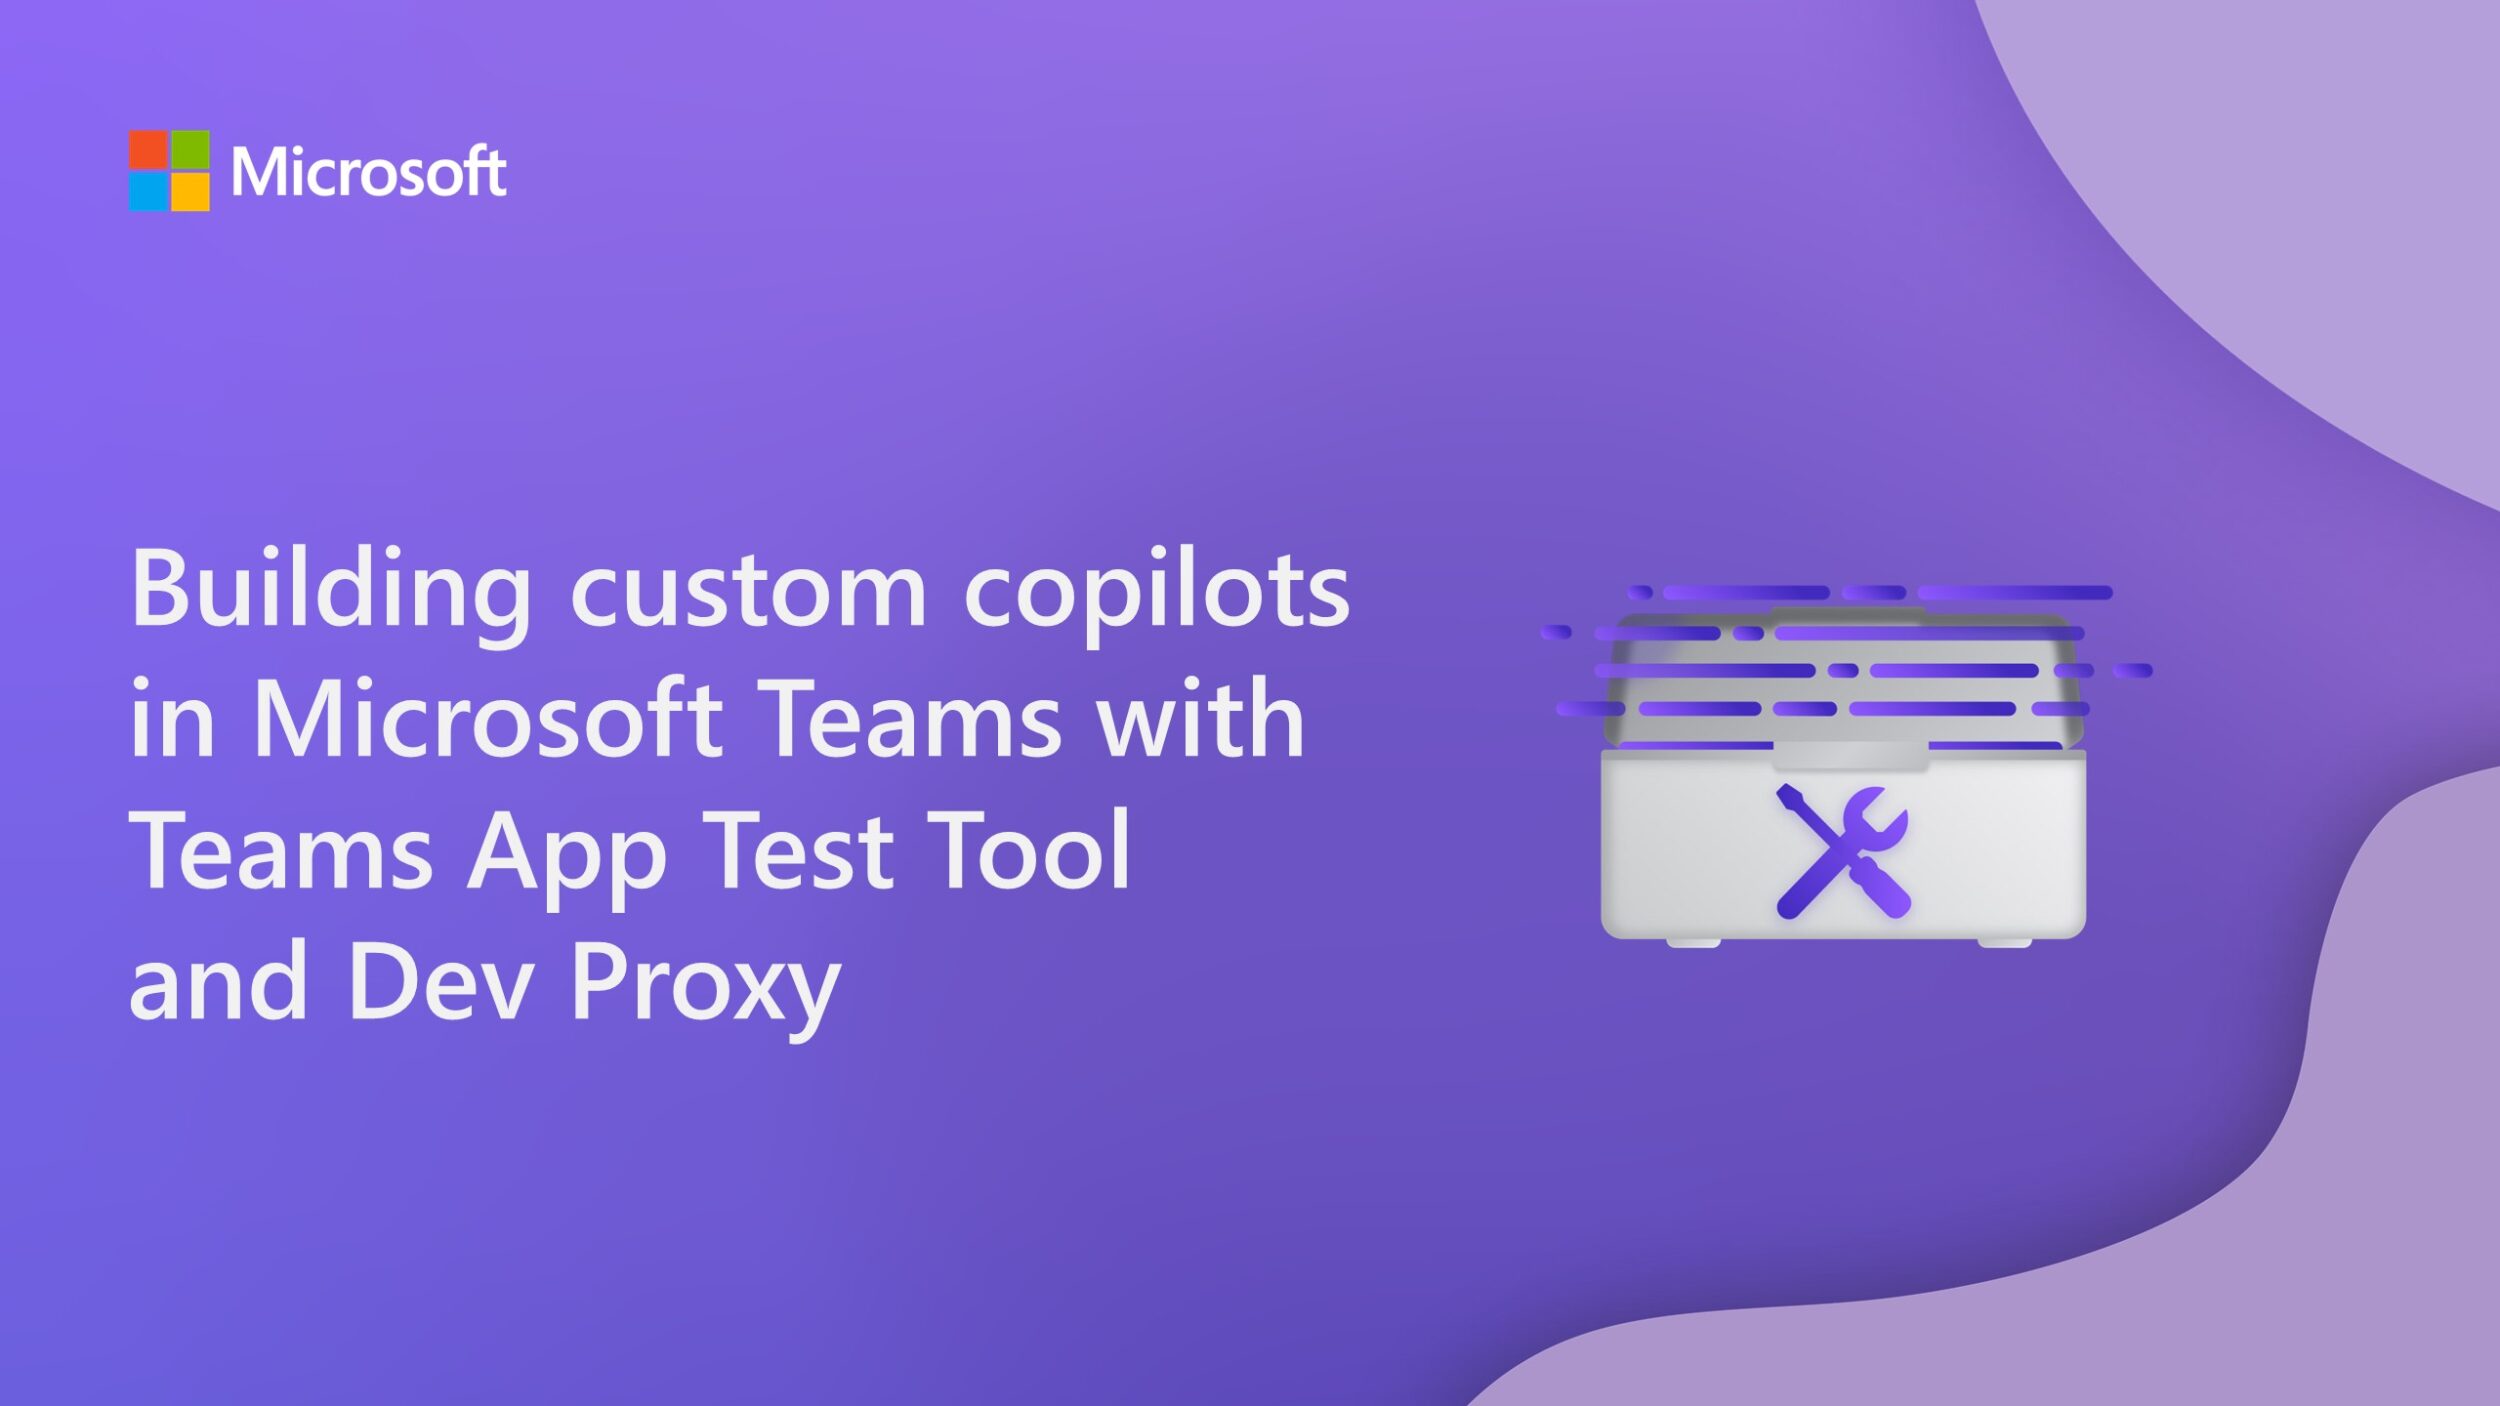 Building custom copilots in Microsoft Teams with Teams App Test Tool and Dev Proxy